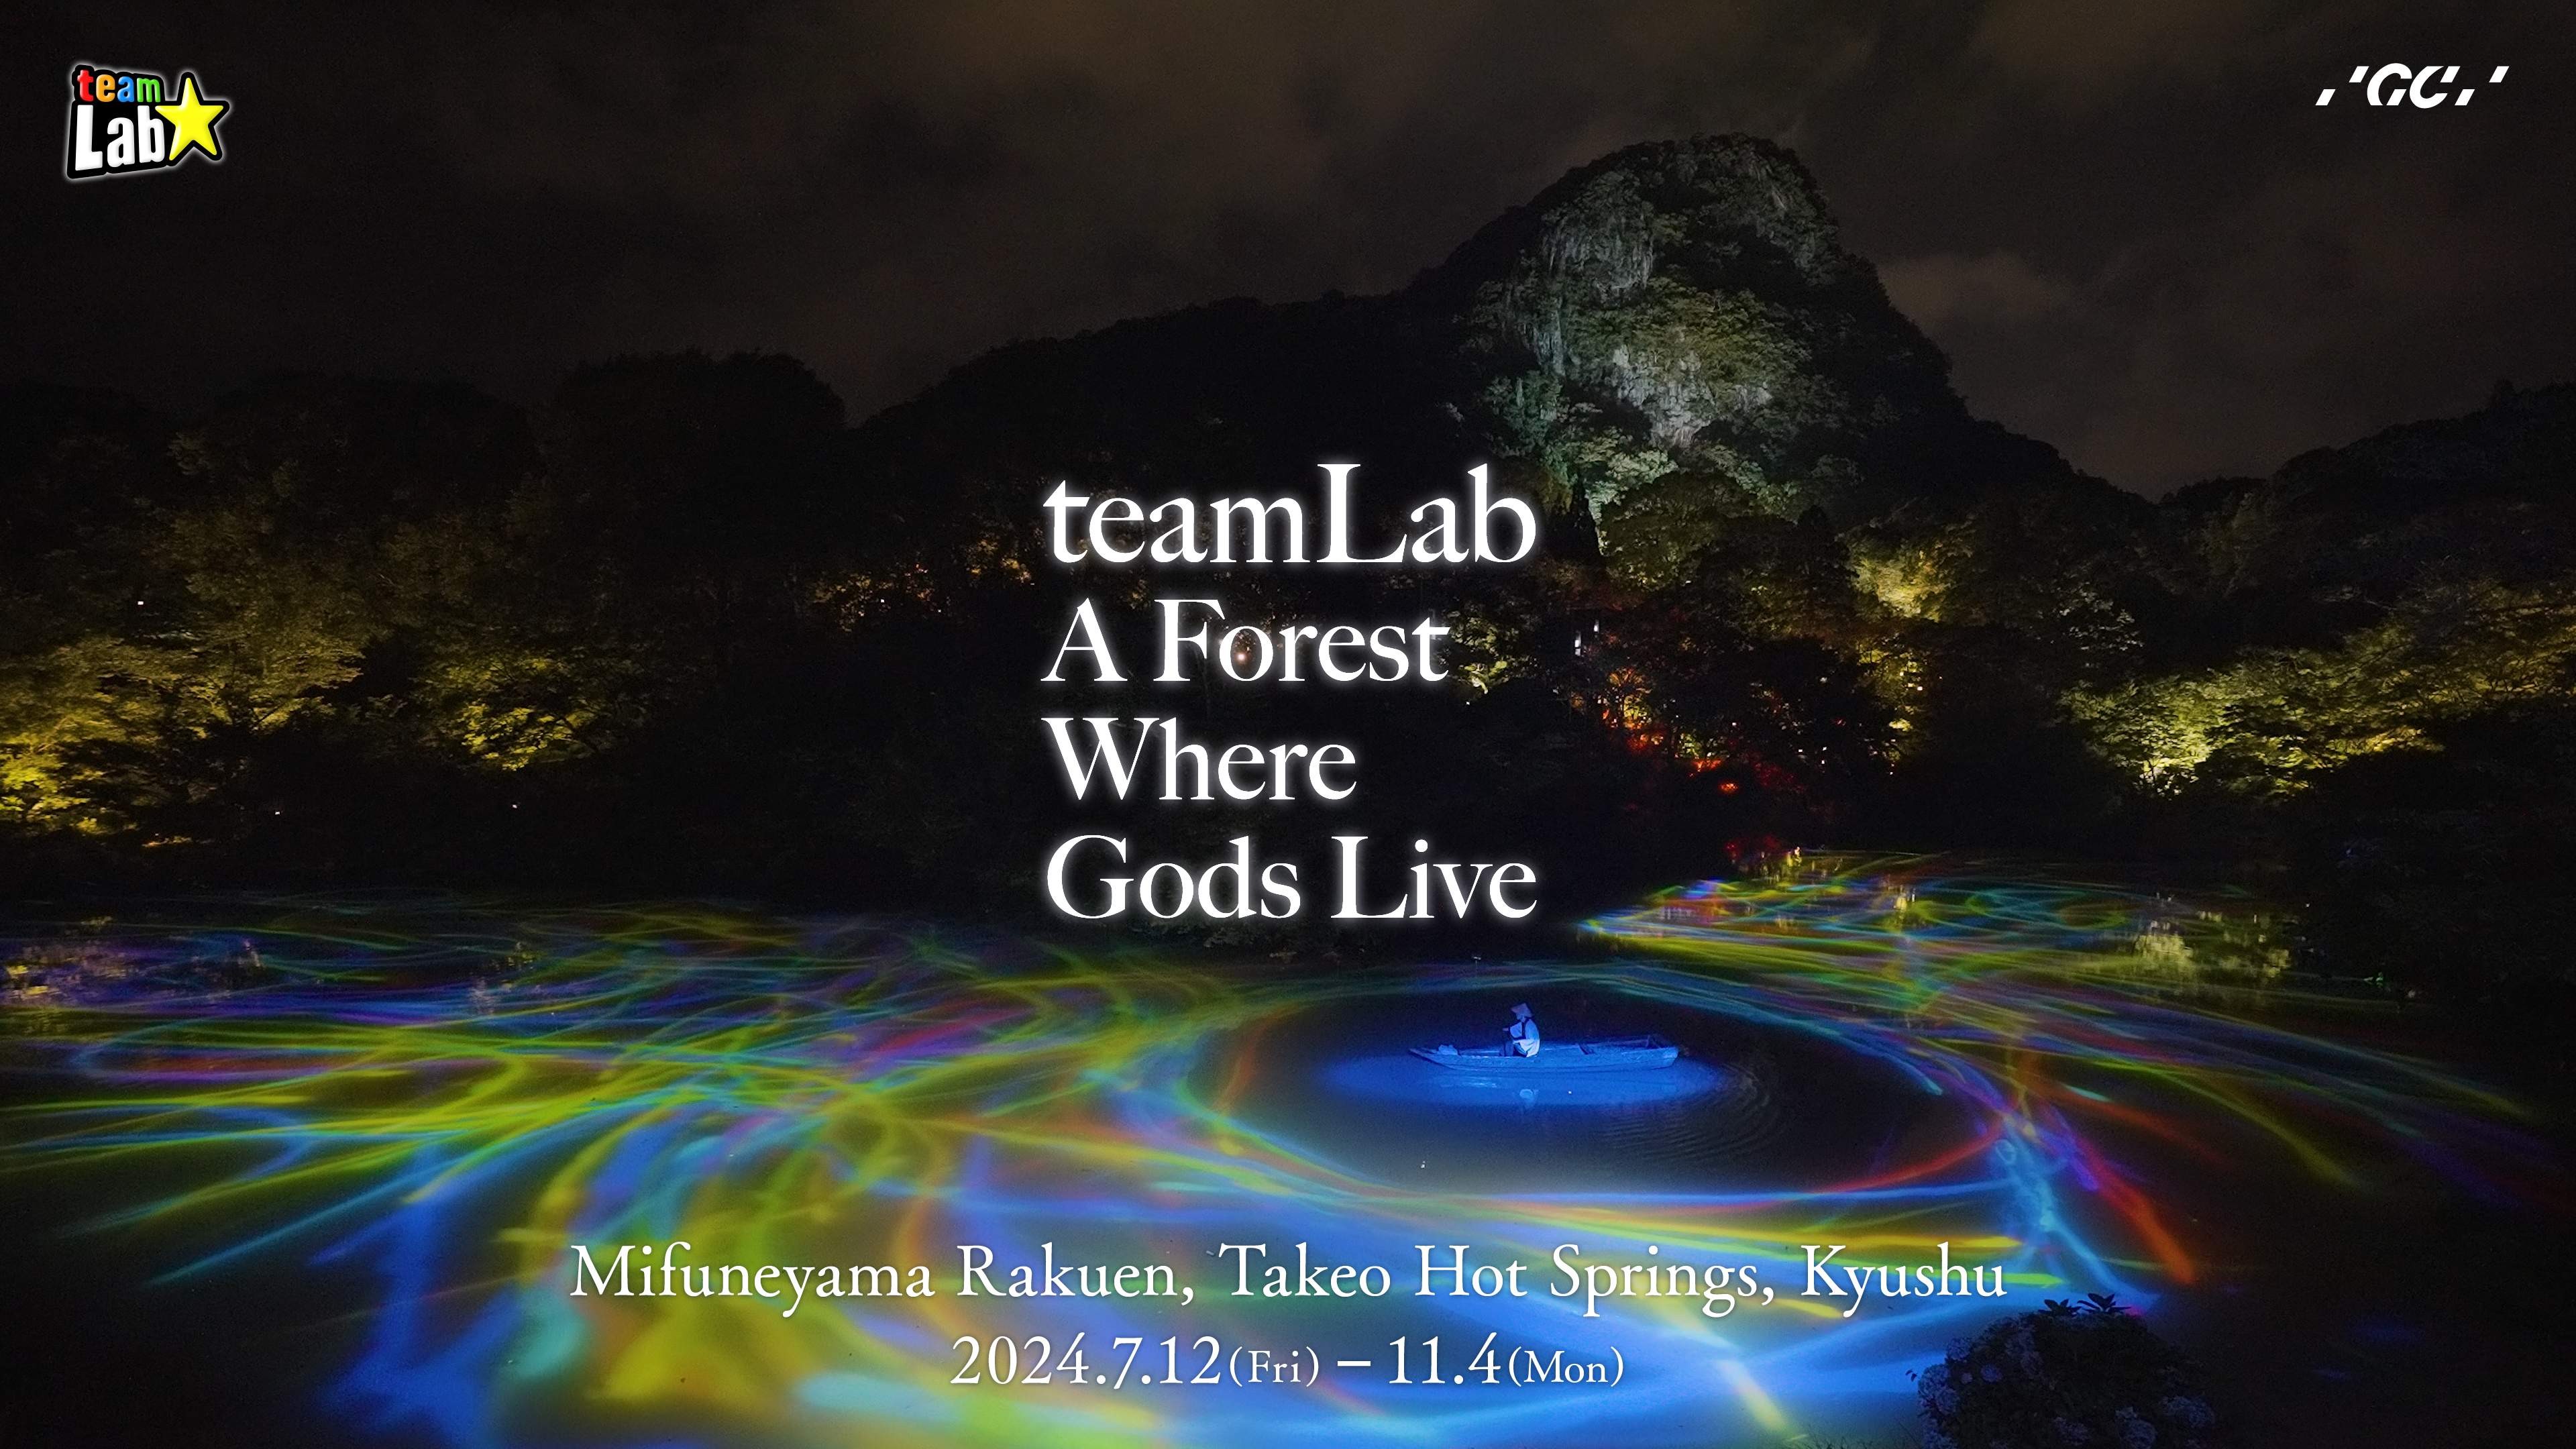 use-copyright-at-teamlab-a-forest-where-gods-live-gc-mifuneyama-rakuen-takeo-hot-springs-kyushu-teamlab-1718244704.jpg